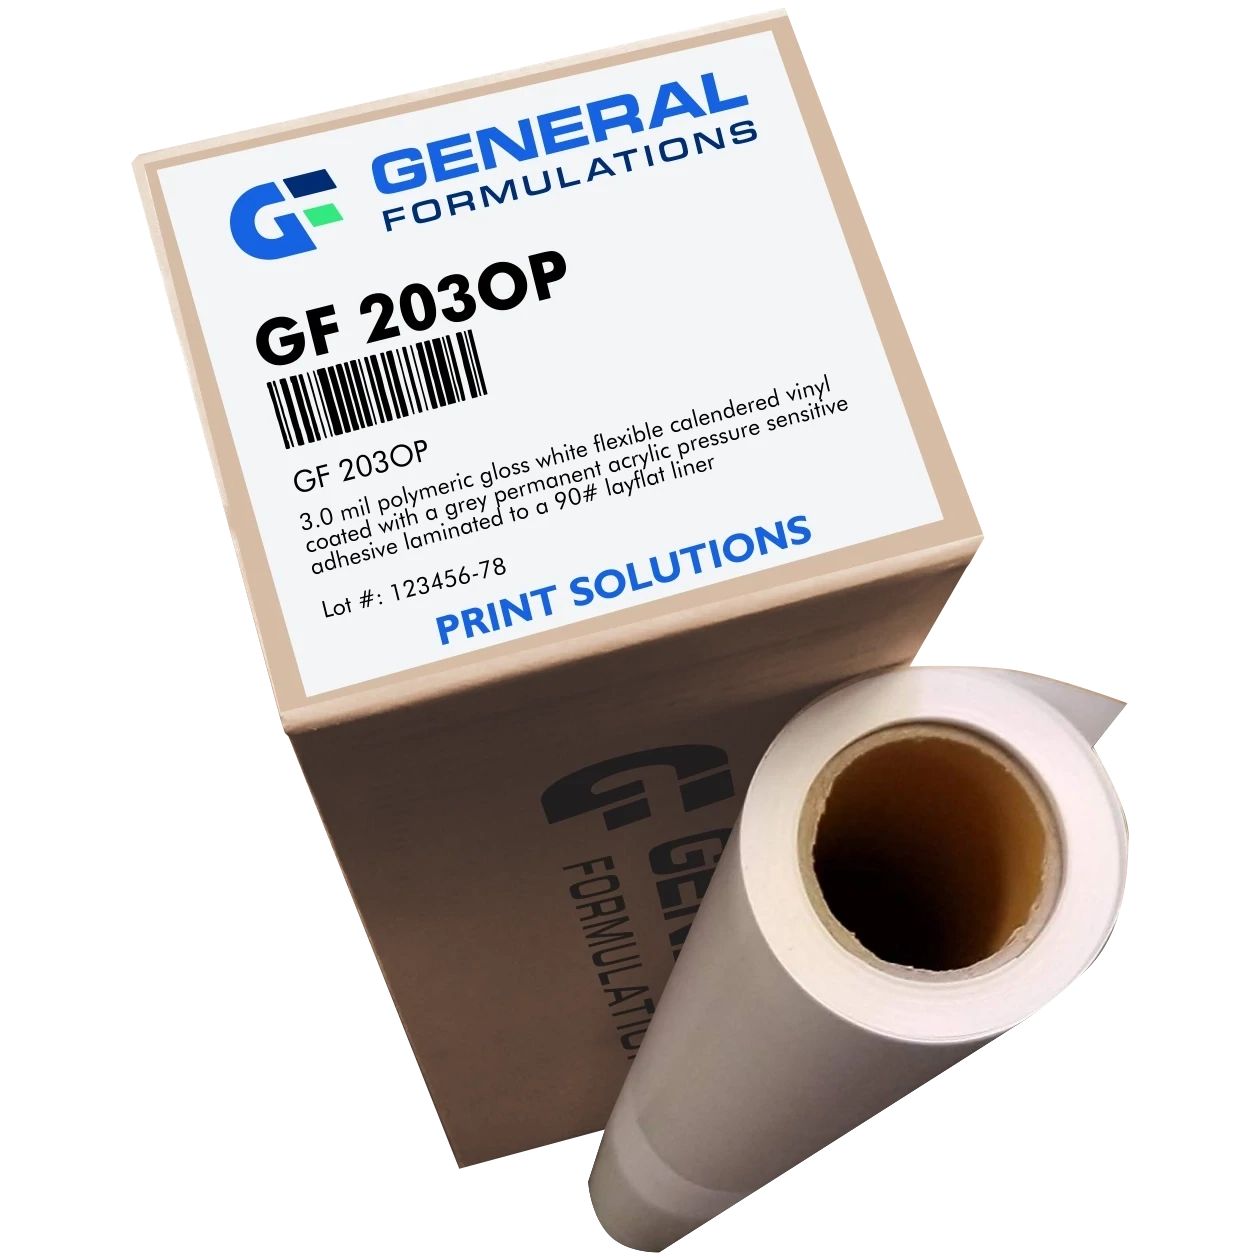 General Formulations 203OP Gloss White Opaque Vinyl - Permanent